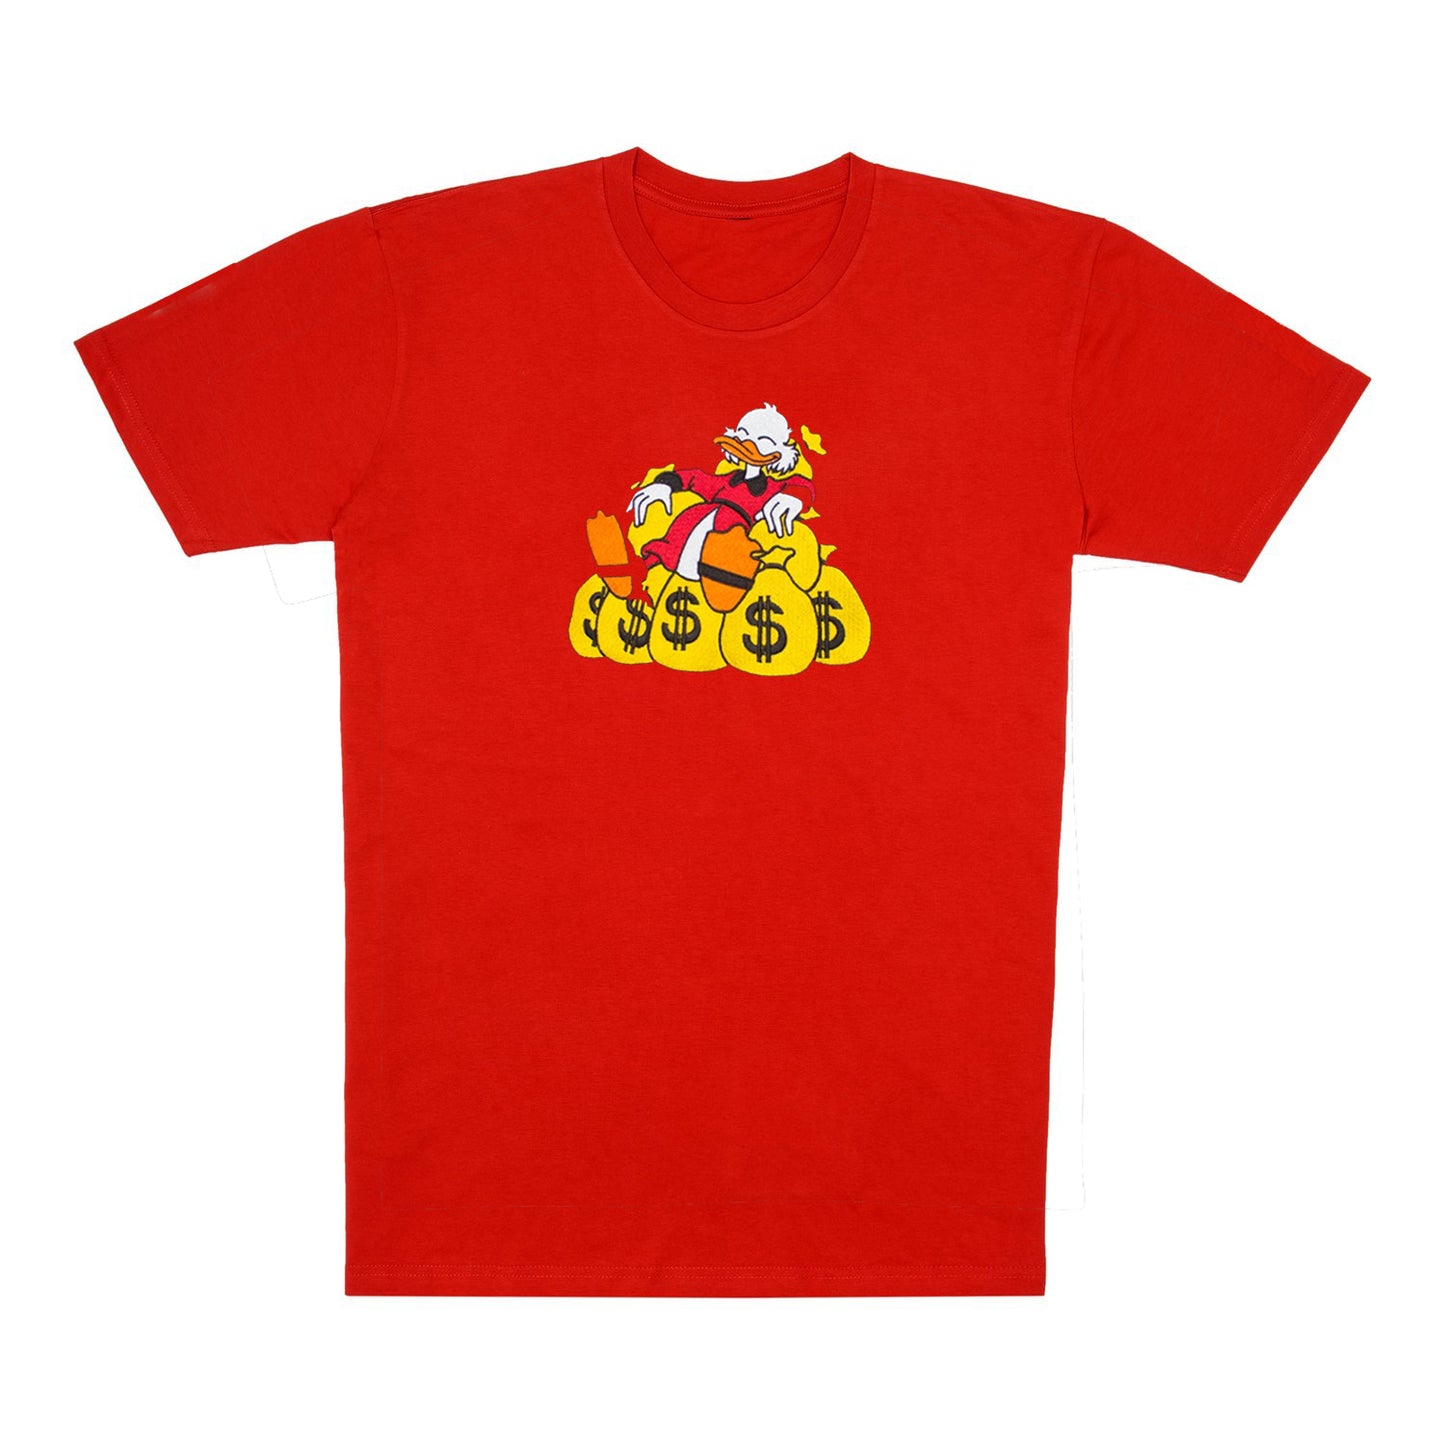 Money Bags Tshirt - RED - SALE